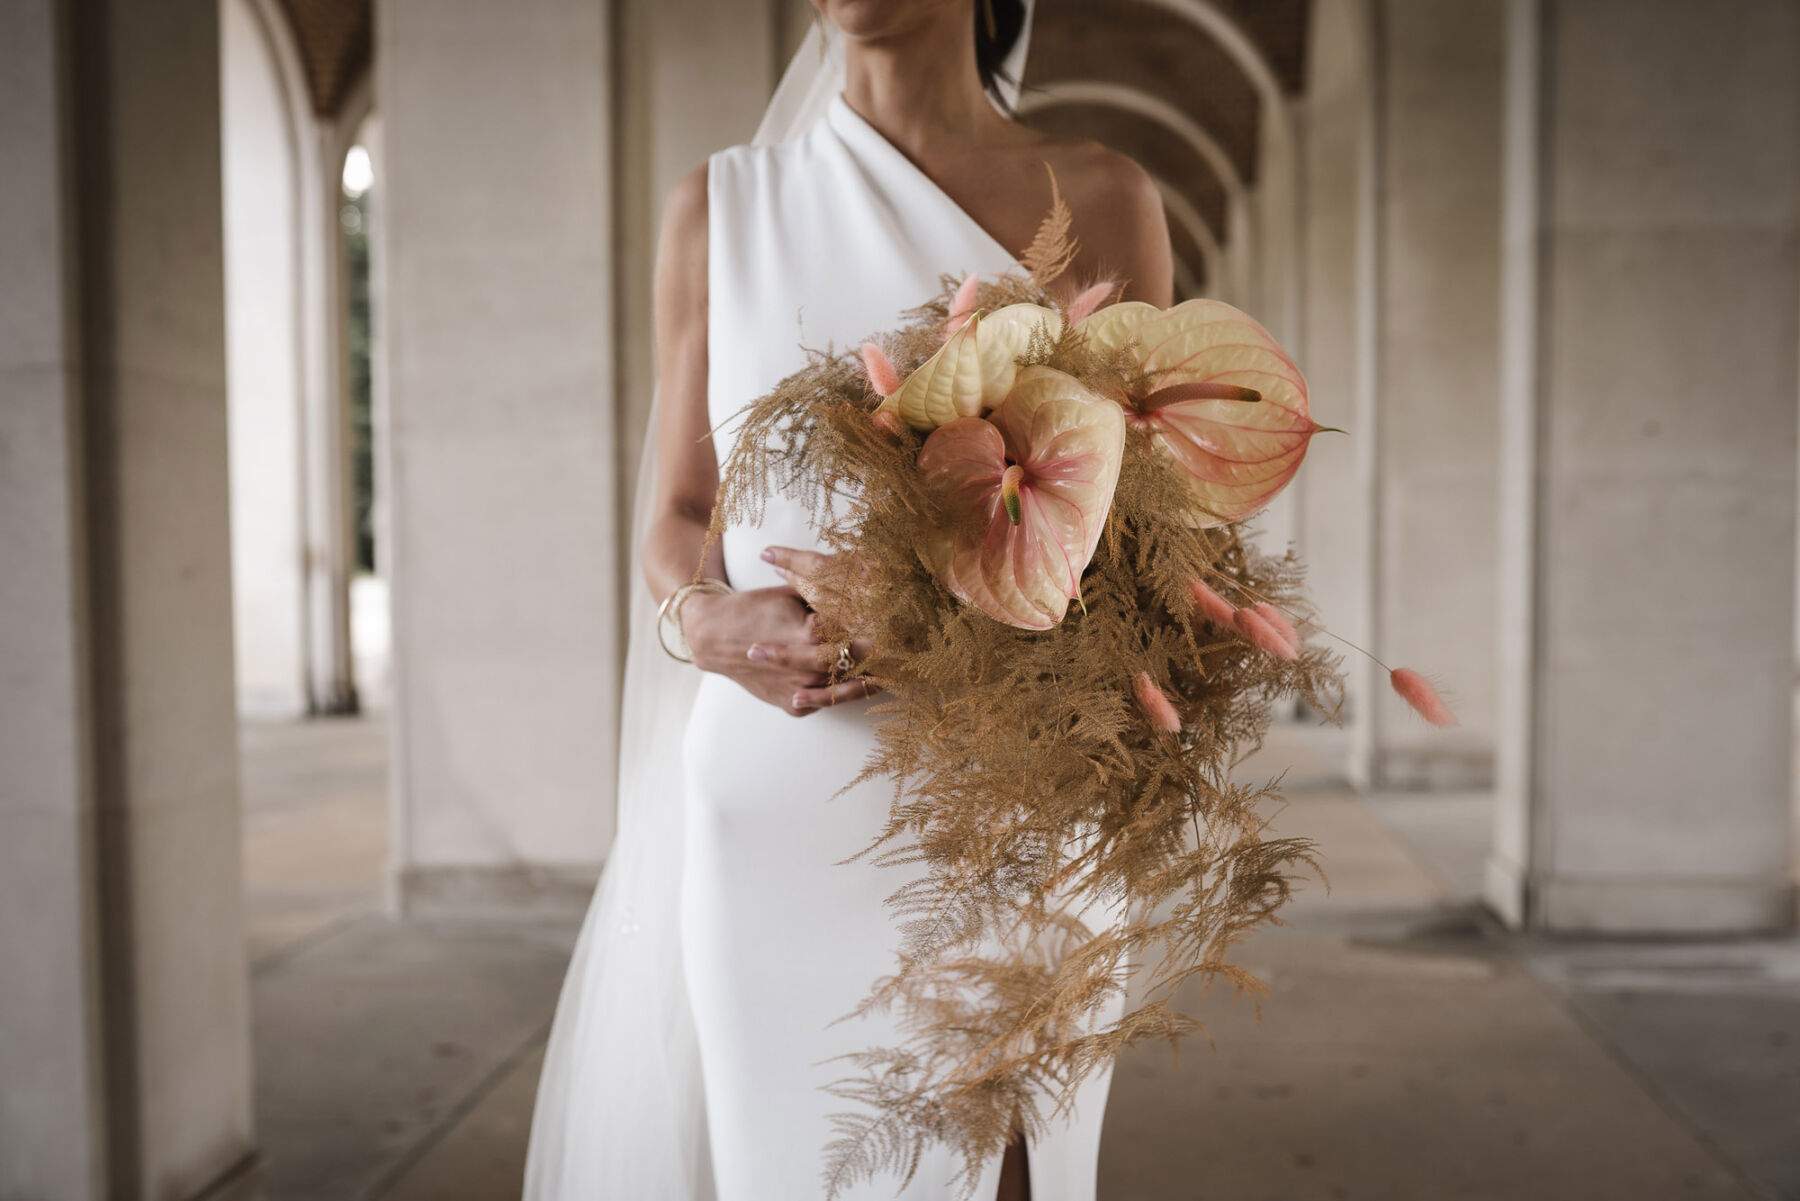 Modern wedding bouquet with bleach dried ferns + Lillies.